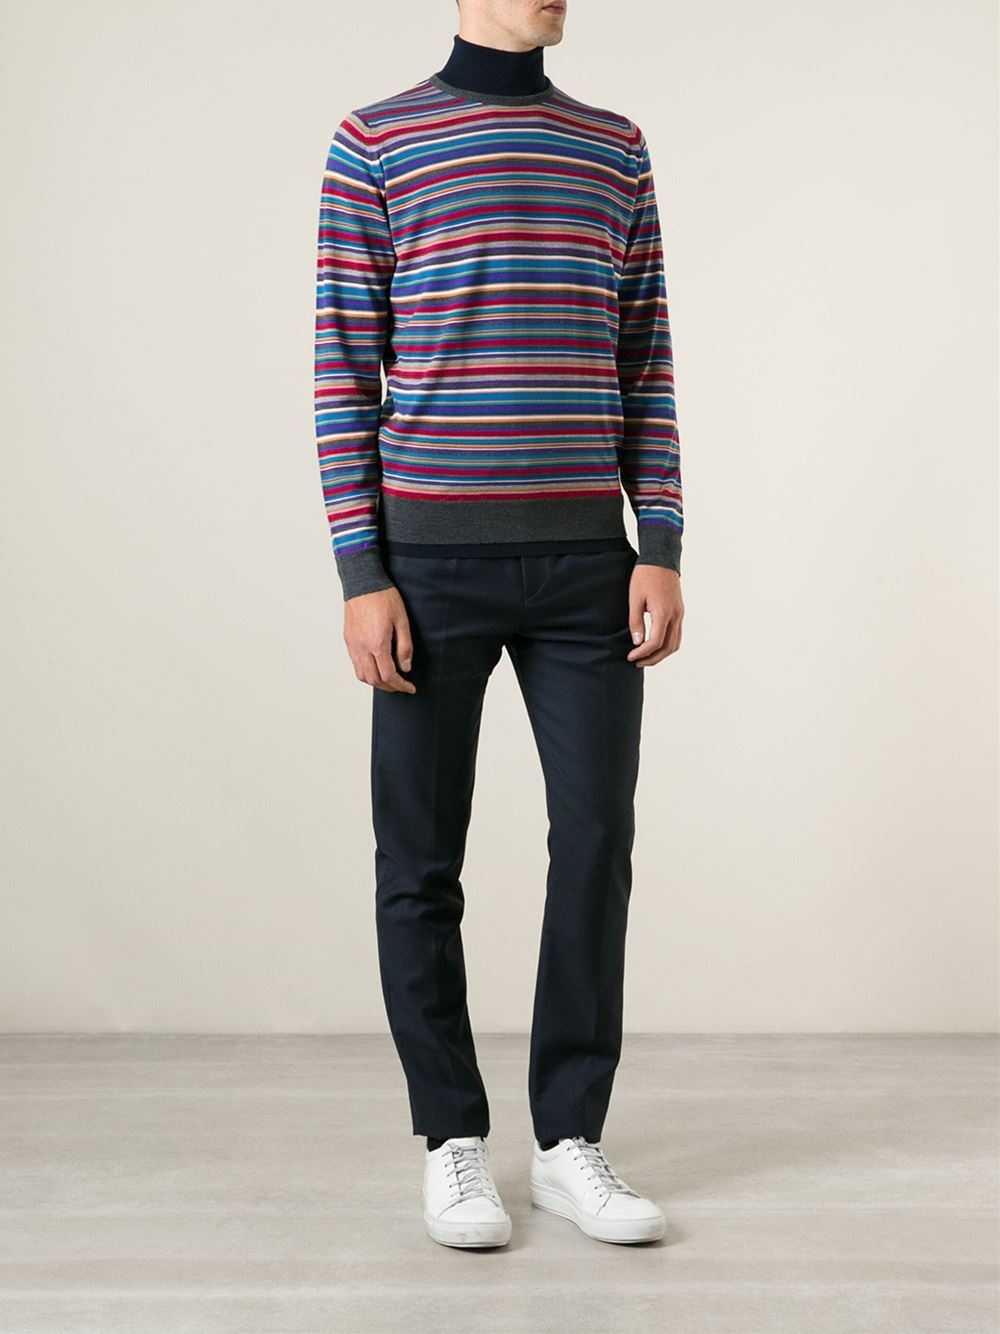 John Smedley Striped Turtleneck Sweater for Men | Lyst